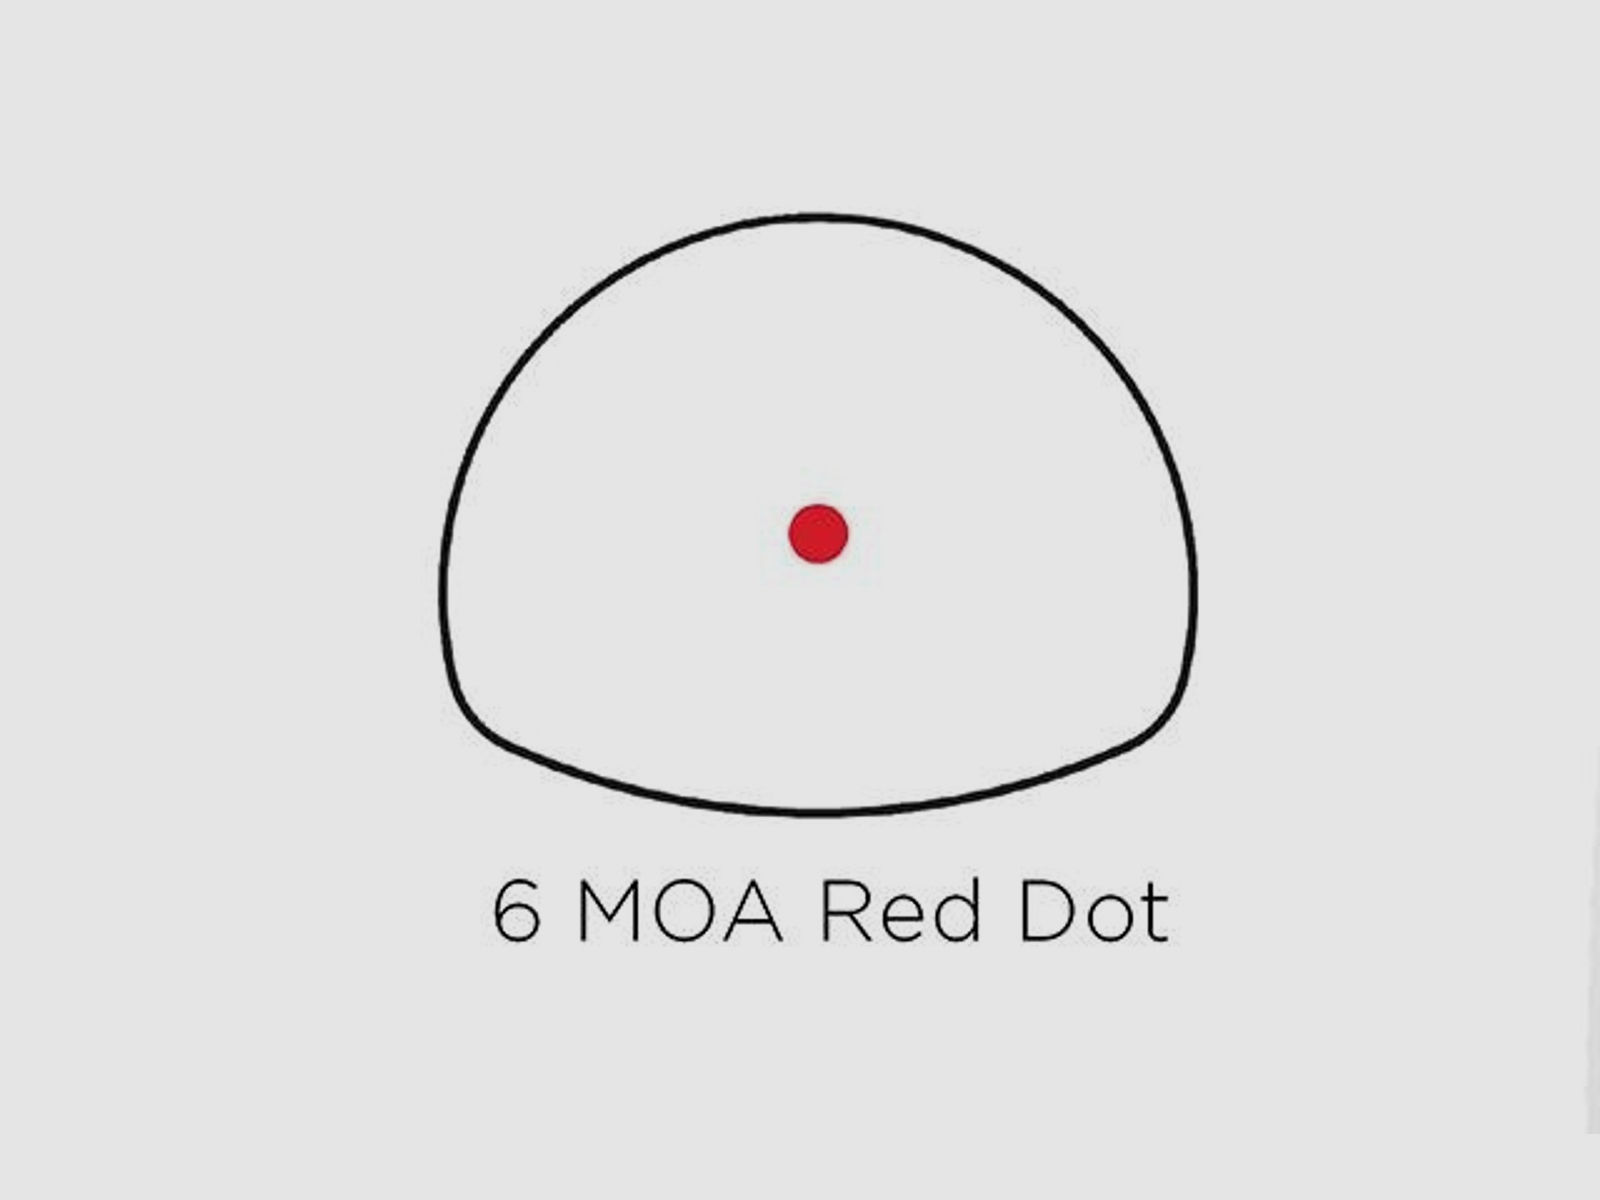 Sig Sauer ROMEO ZERO Reflex Sight 1x18mm 6 MOA Red Dot